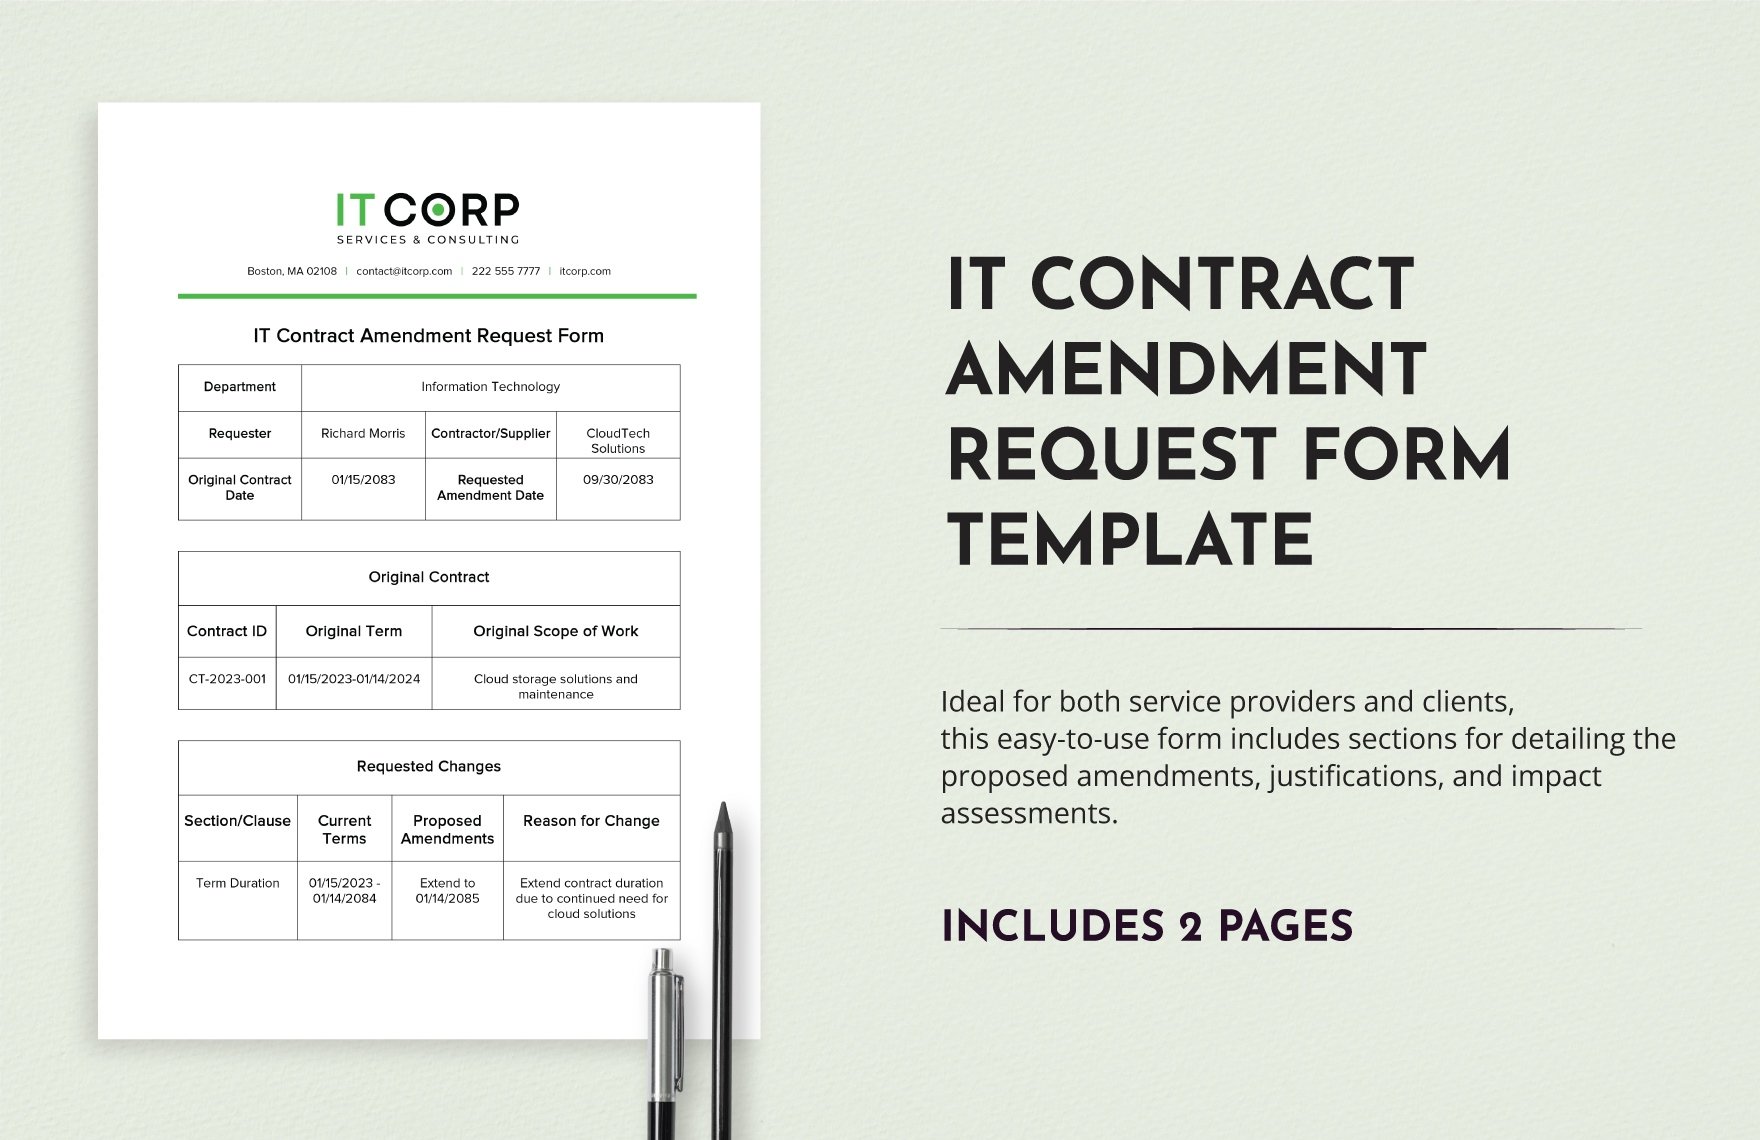 IT Contract Amendment Request Form Template